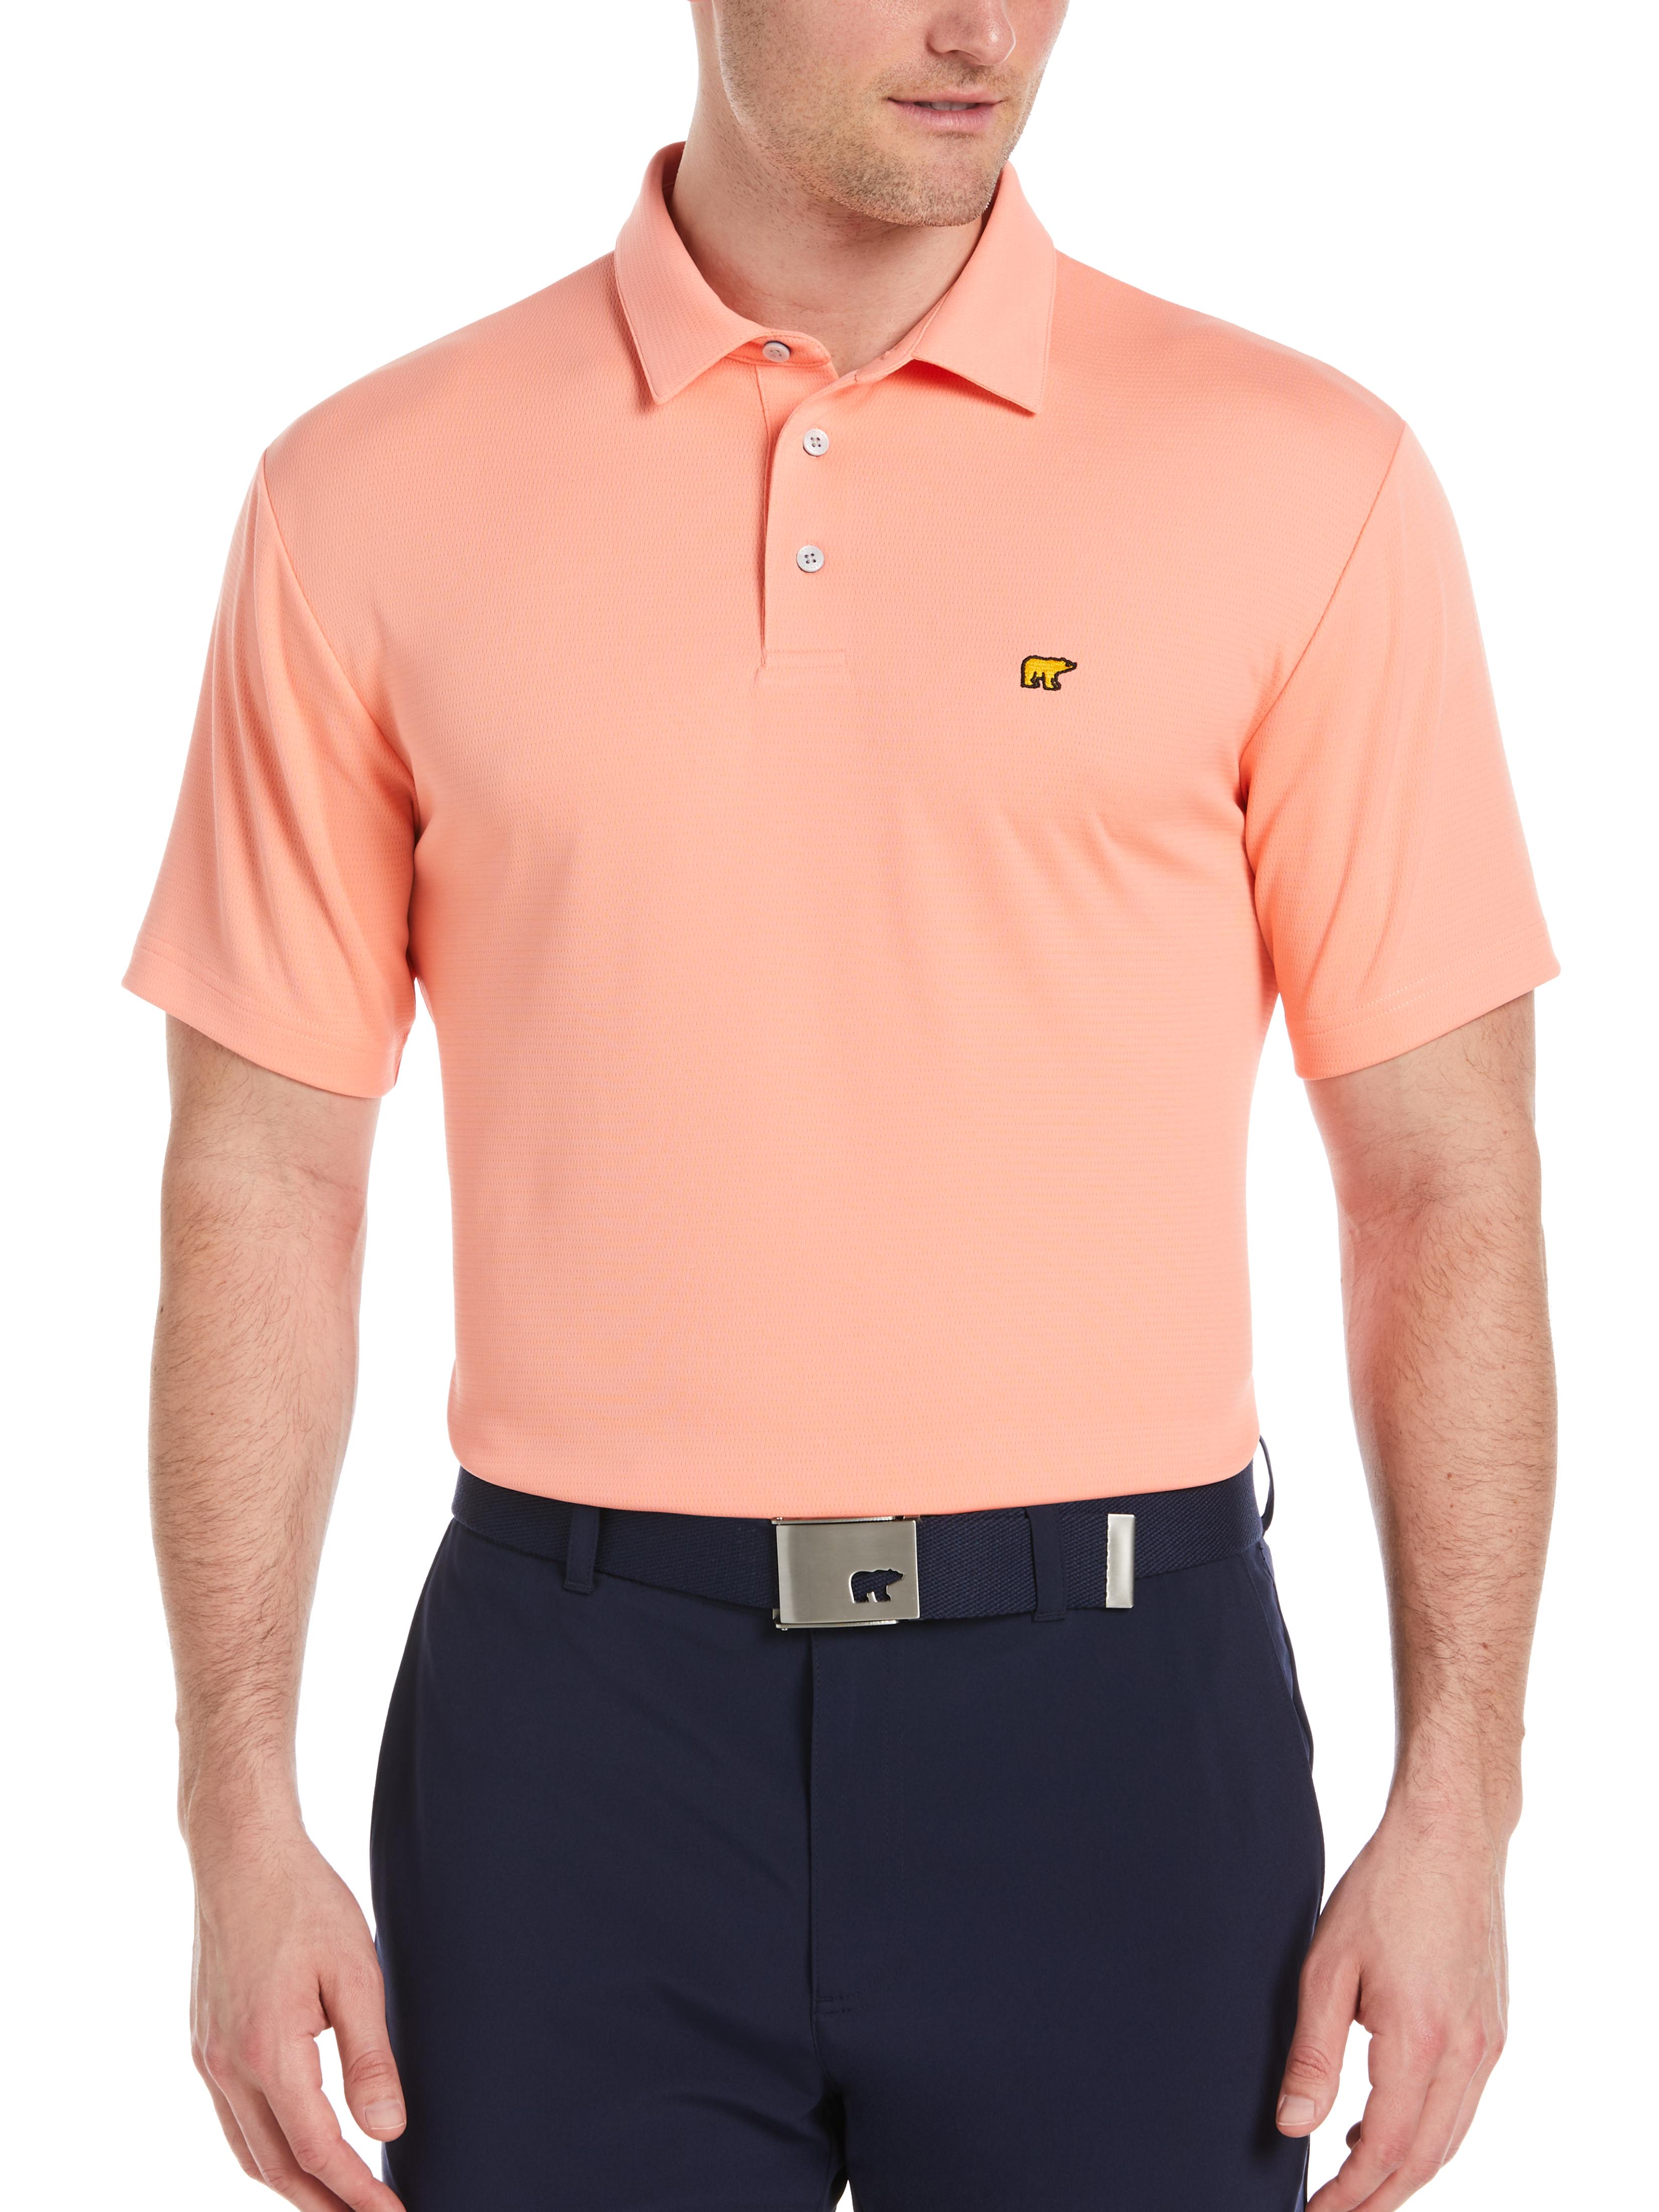 Jack Nicklaus Mens Solid Textured Golf Polo Shirt, Size Medium, Desert Flower Pink, 100% Polyester | Golf Apparel Shop